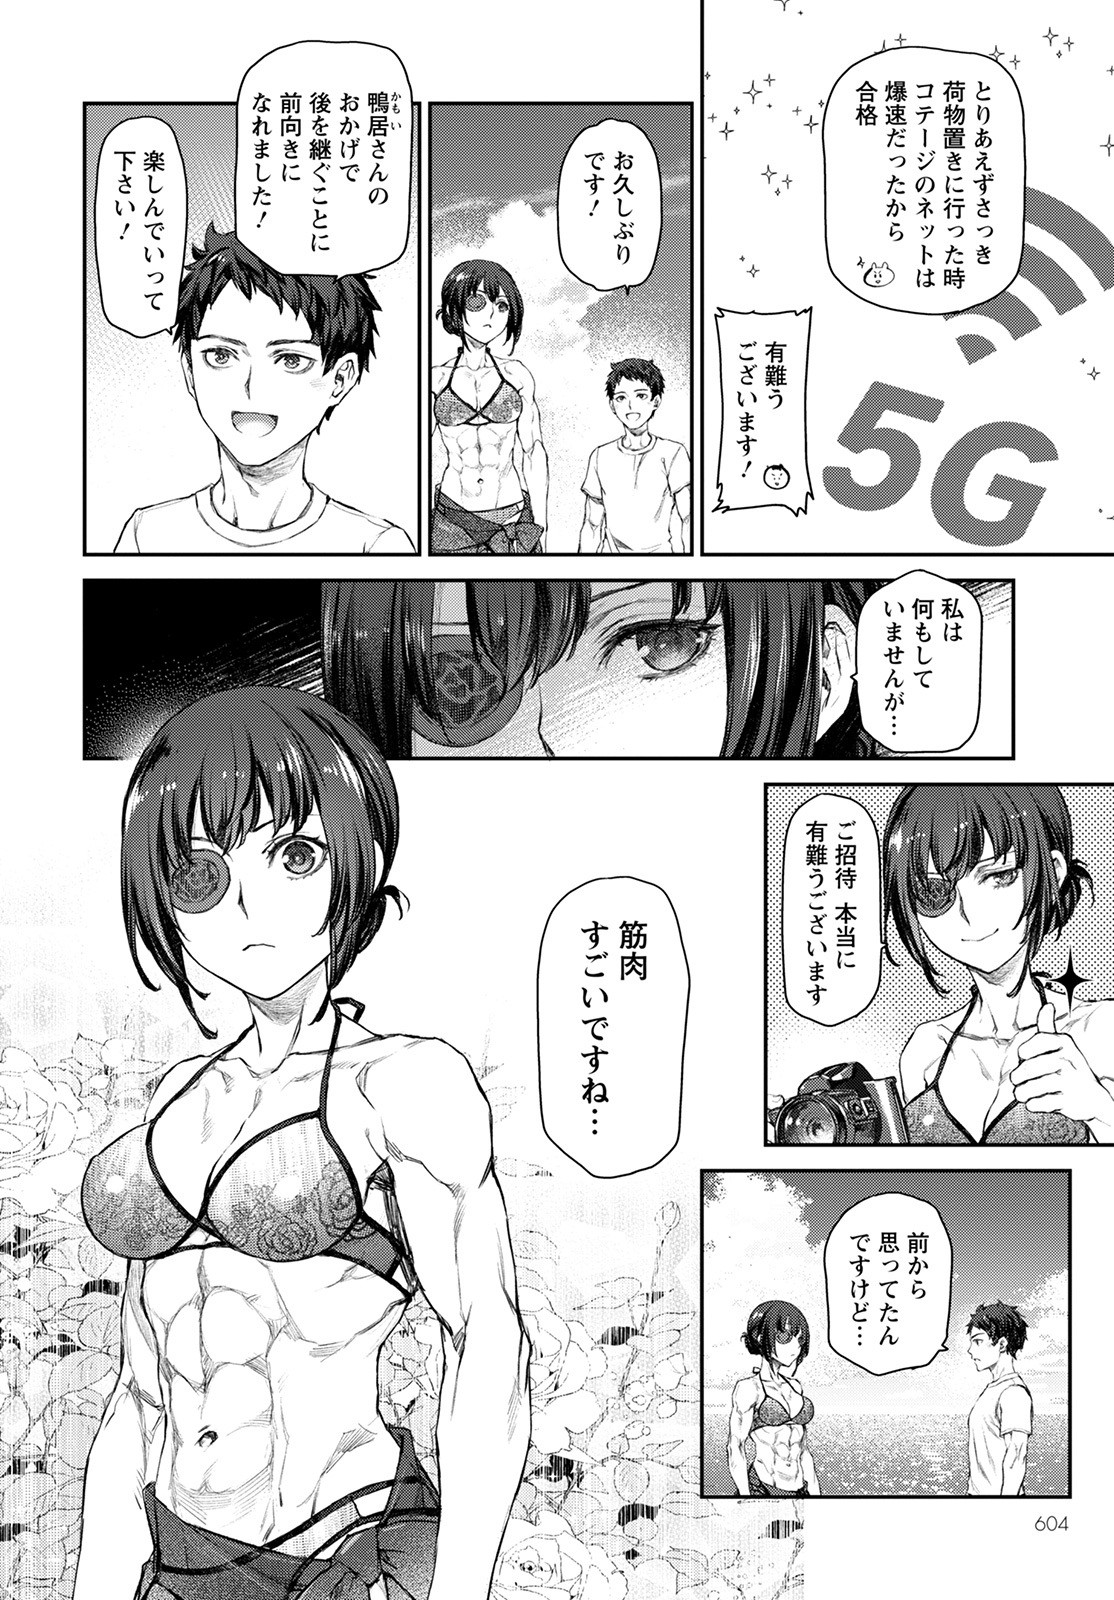 Uchi no Maid ga Uzasugiru! - Chapter 51 - Page 4